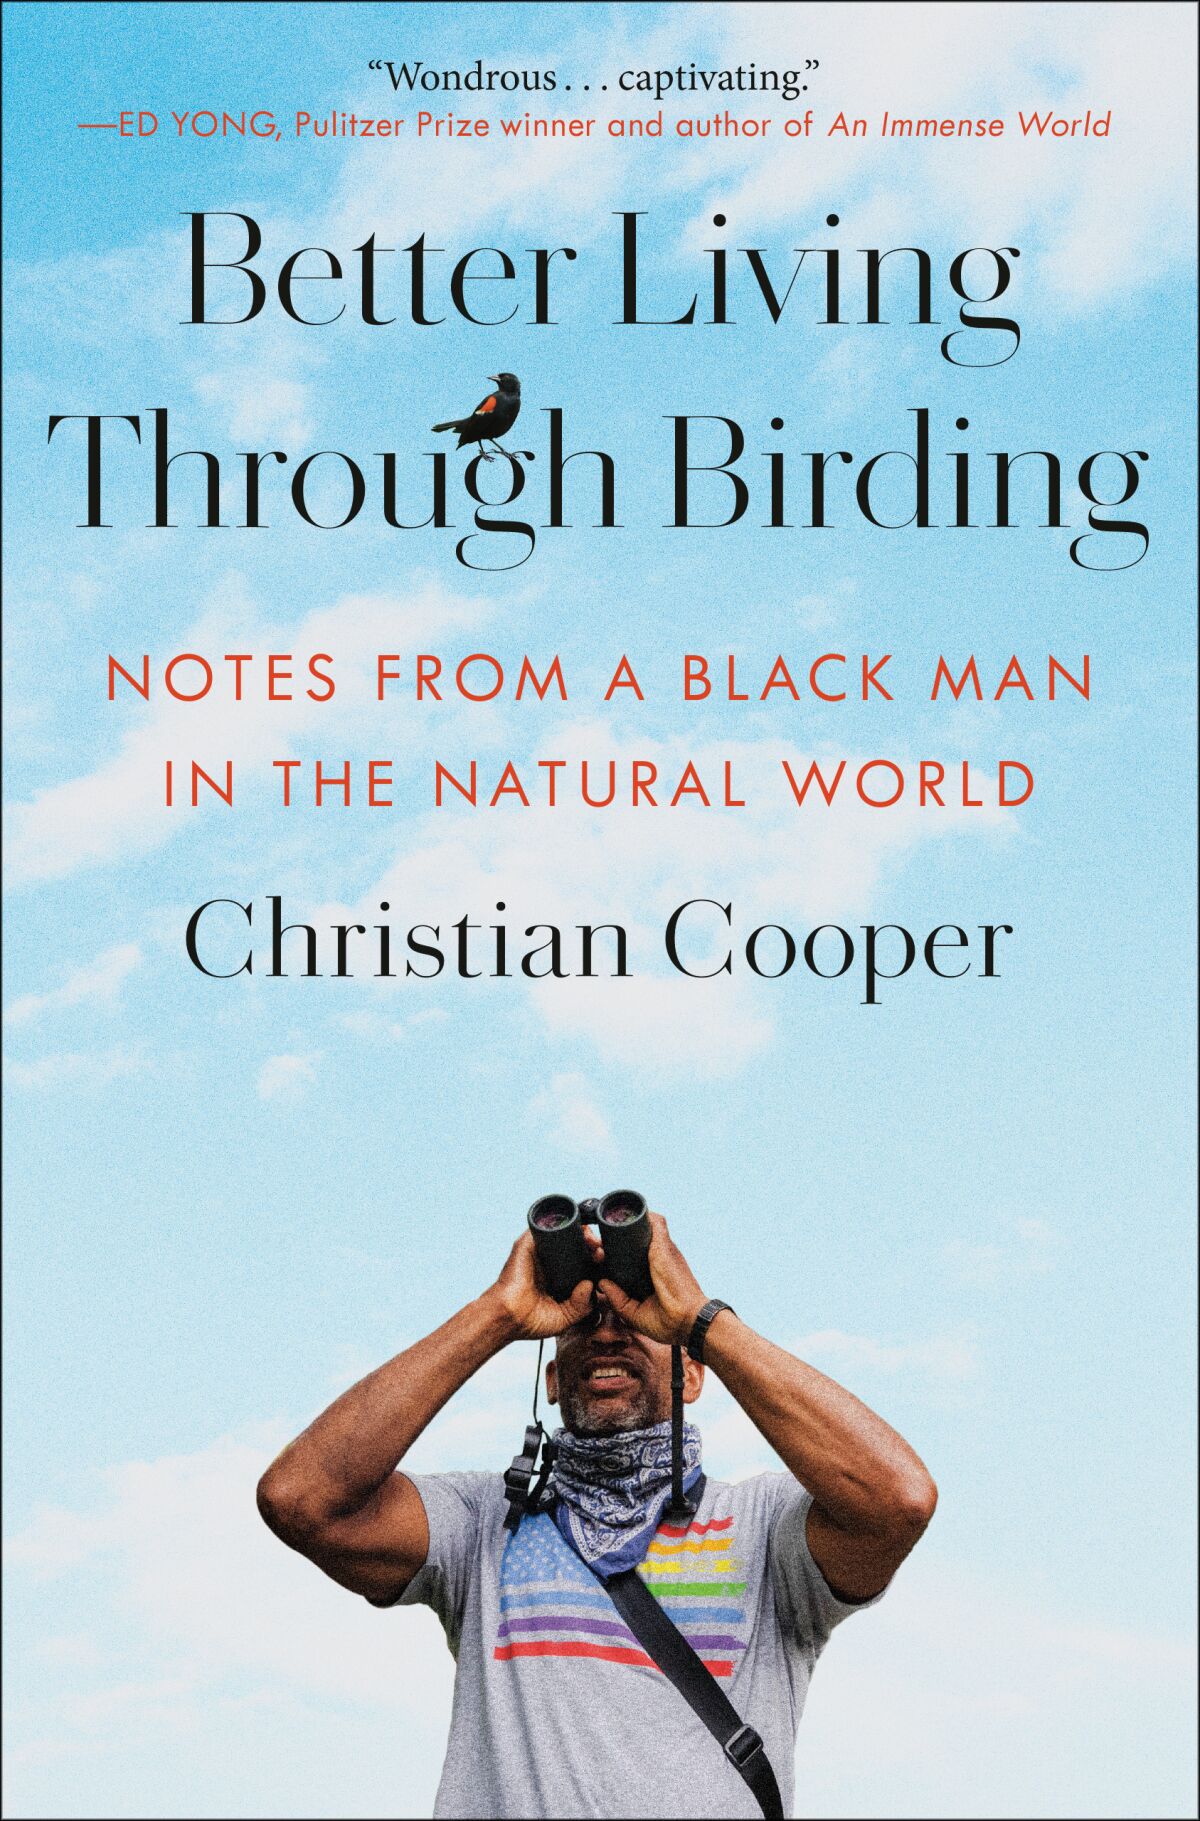 Book cover for "Better Living Through Birding" by Christian Cooper.